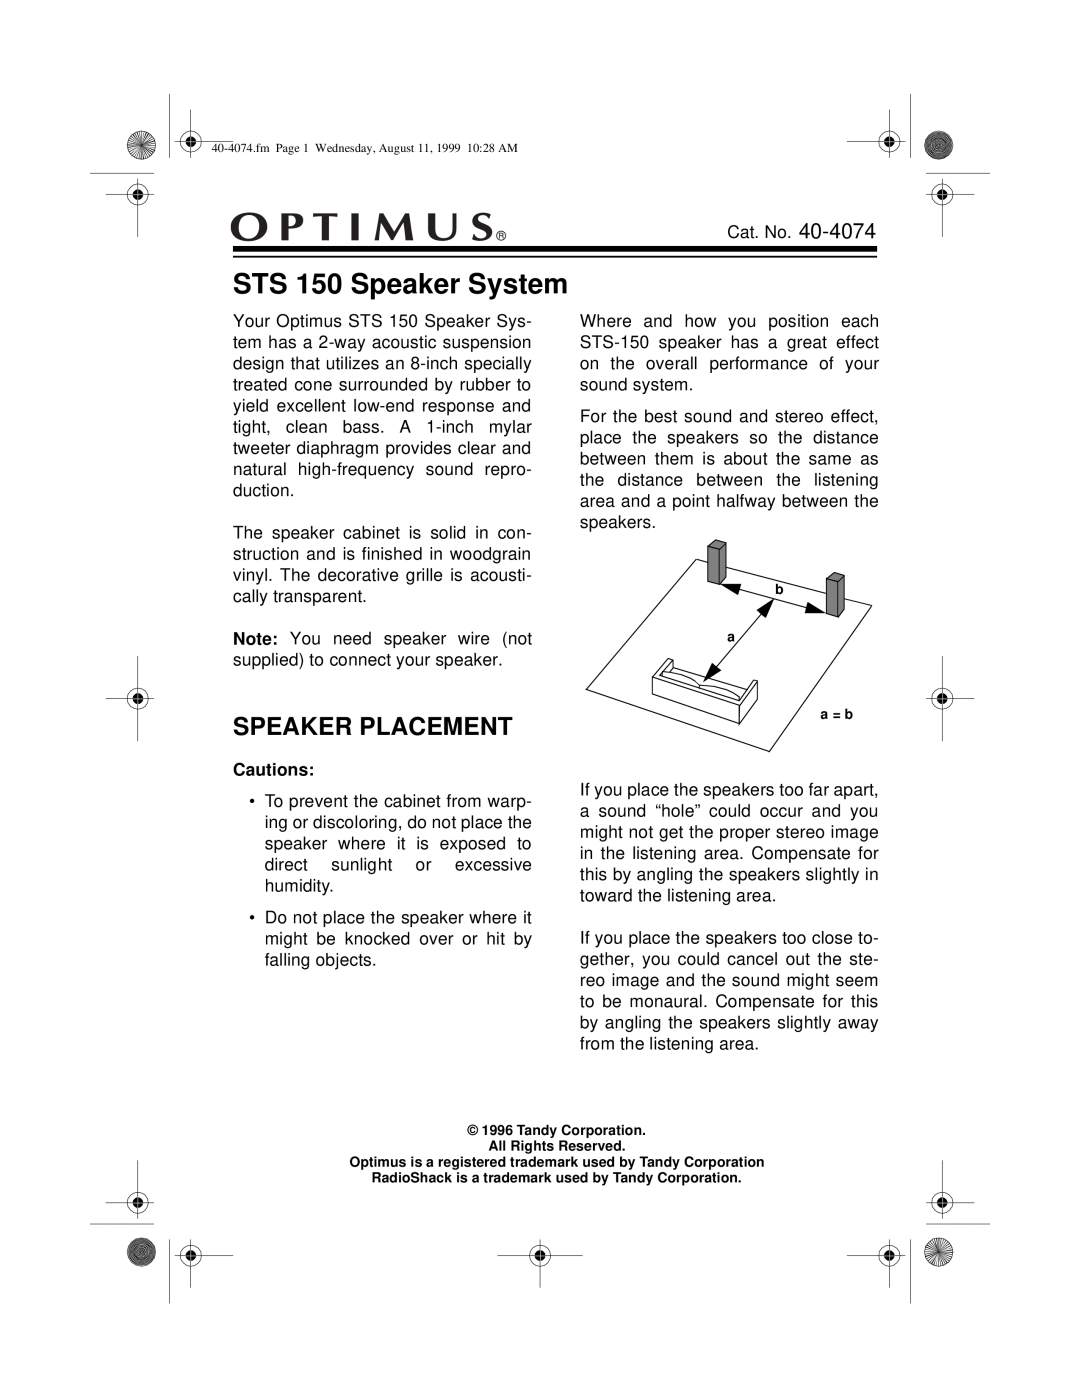 Optimus manual Speaker Placement, Cautions, STS 150 Speaker System 